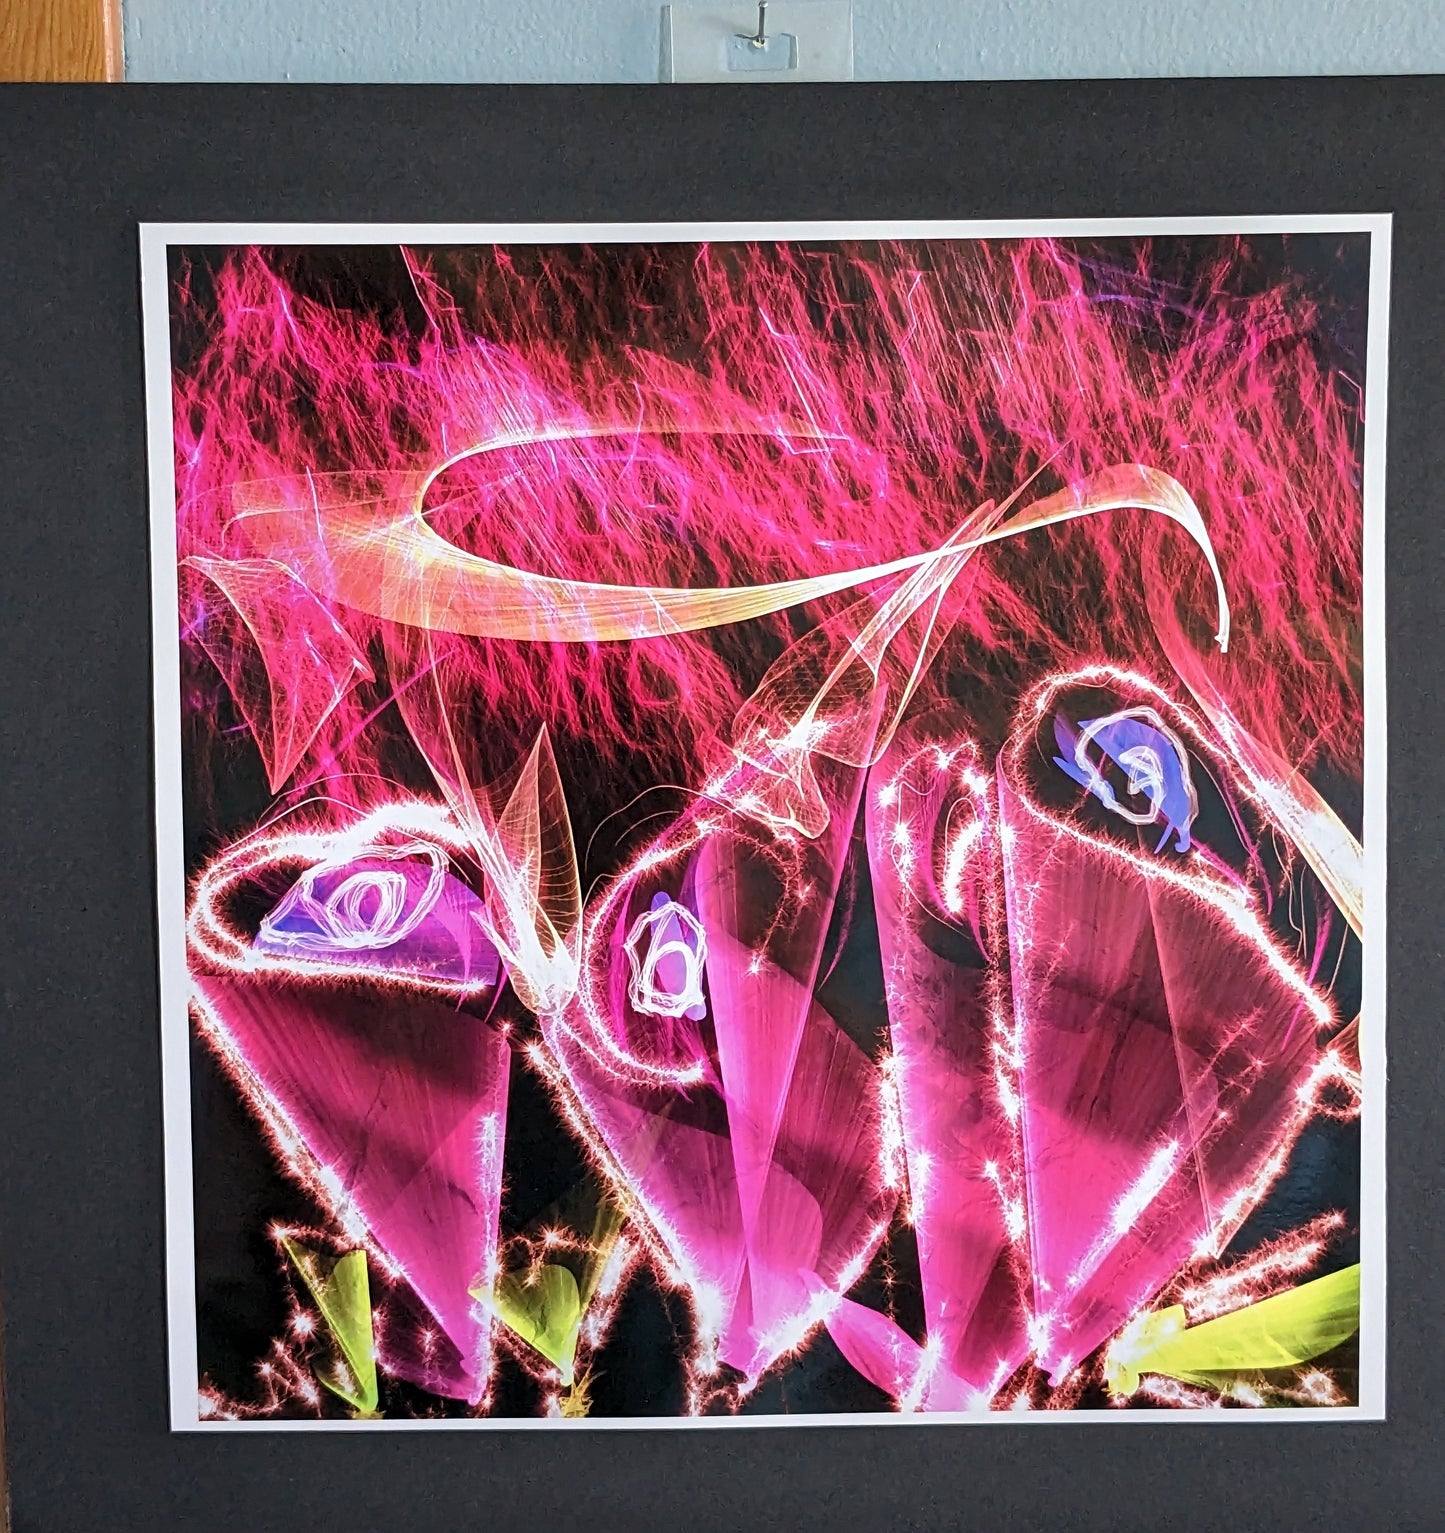 Neon glow rose art special edition metallic prints